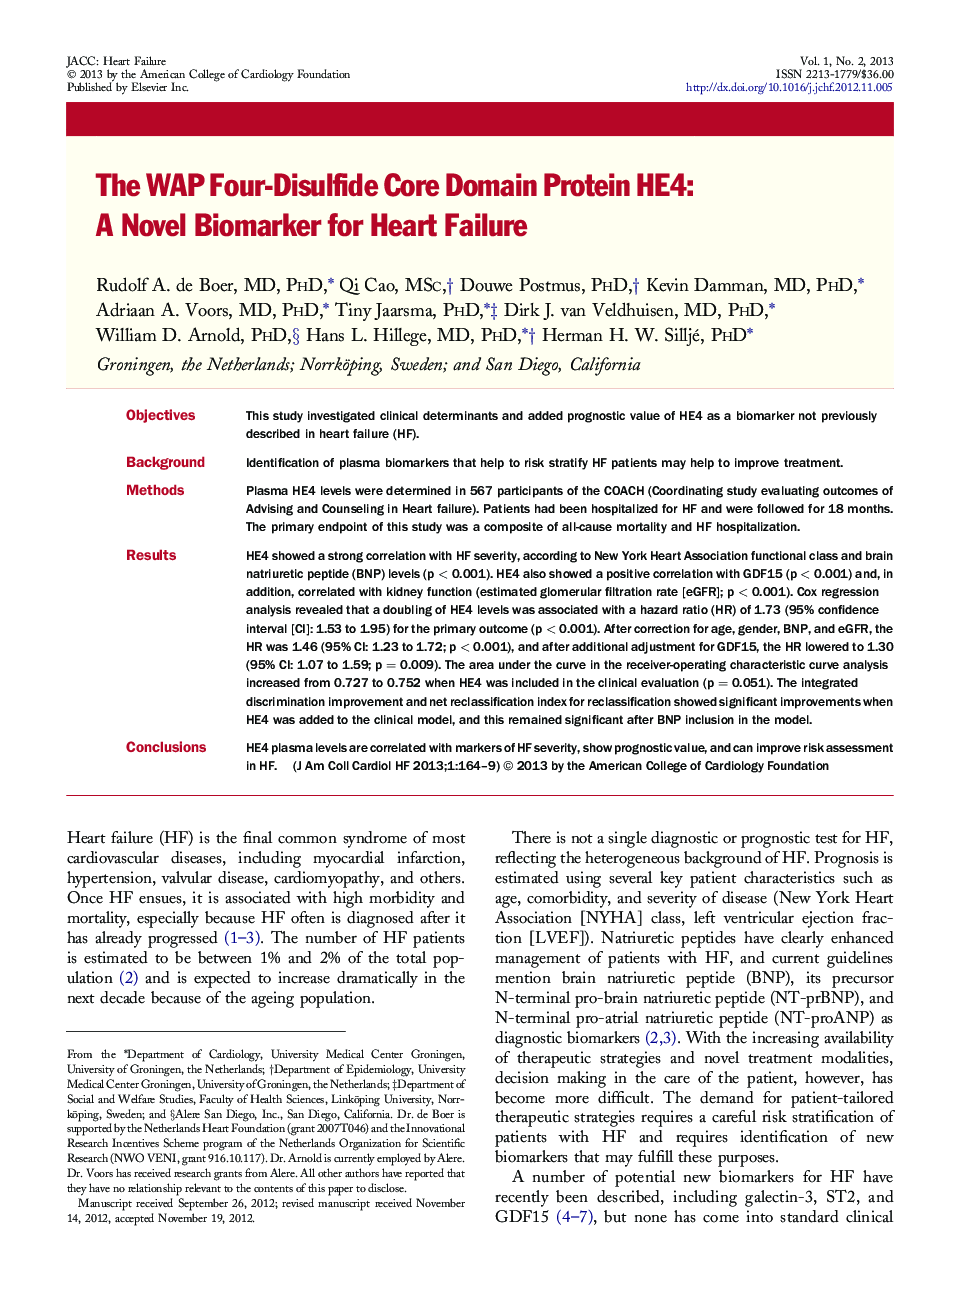 The WAP Four-Disulfide Core Domain Protein HE4: A Novel Biomarker for Heart Failure 